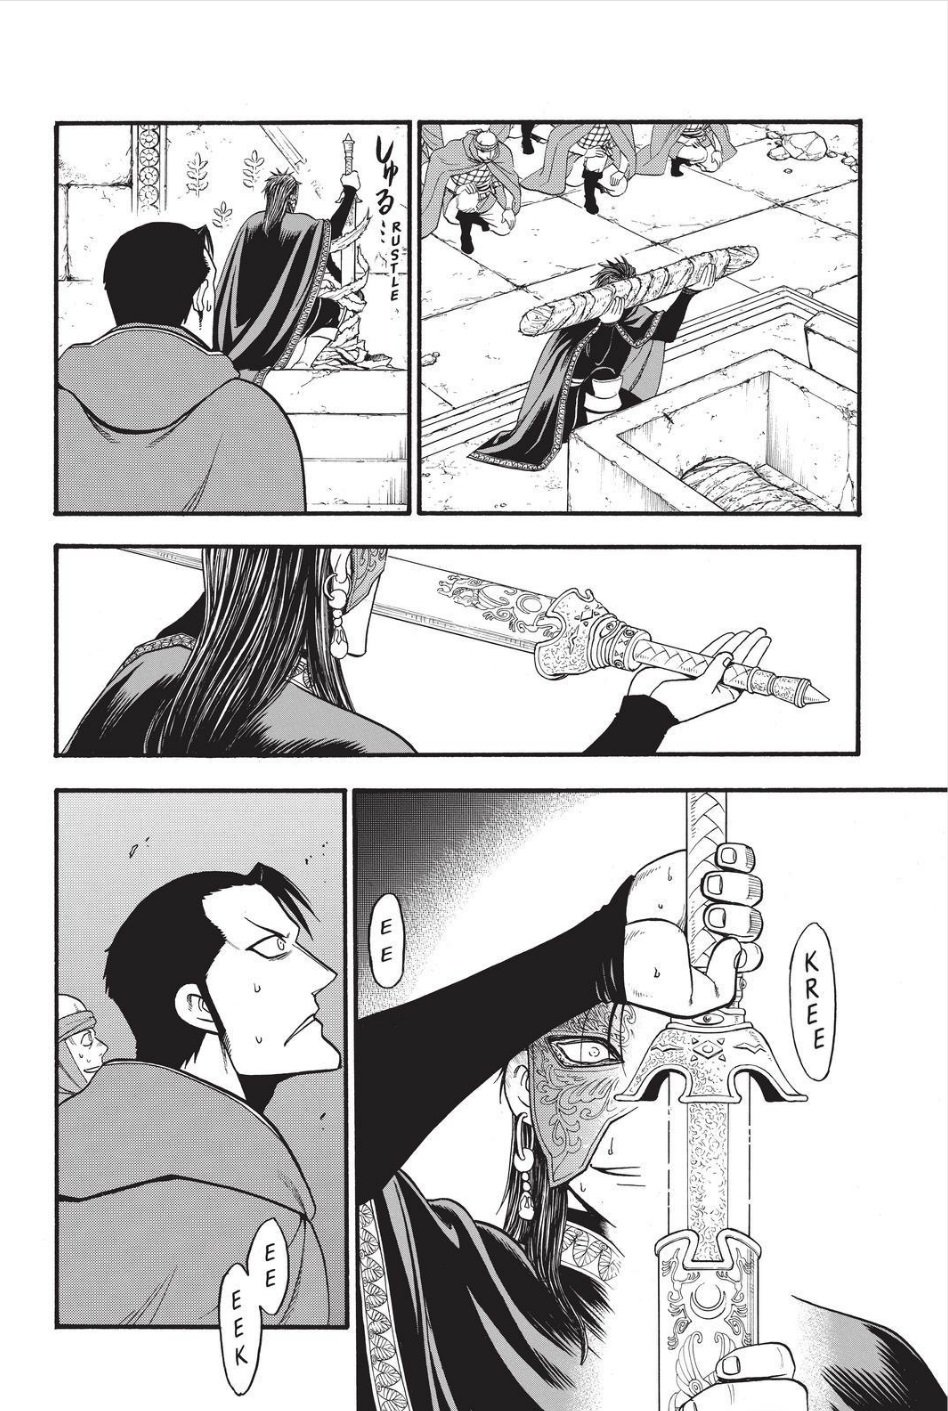 Arslan Senki (ARAKAWA Hiromu) chapter 78 page 18